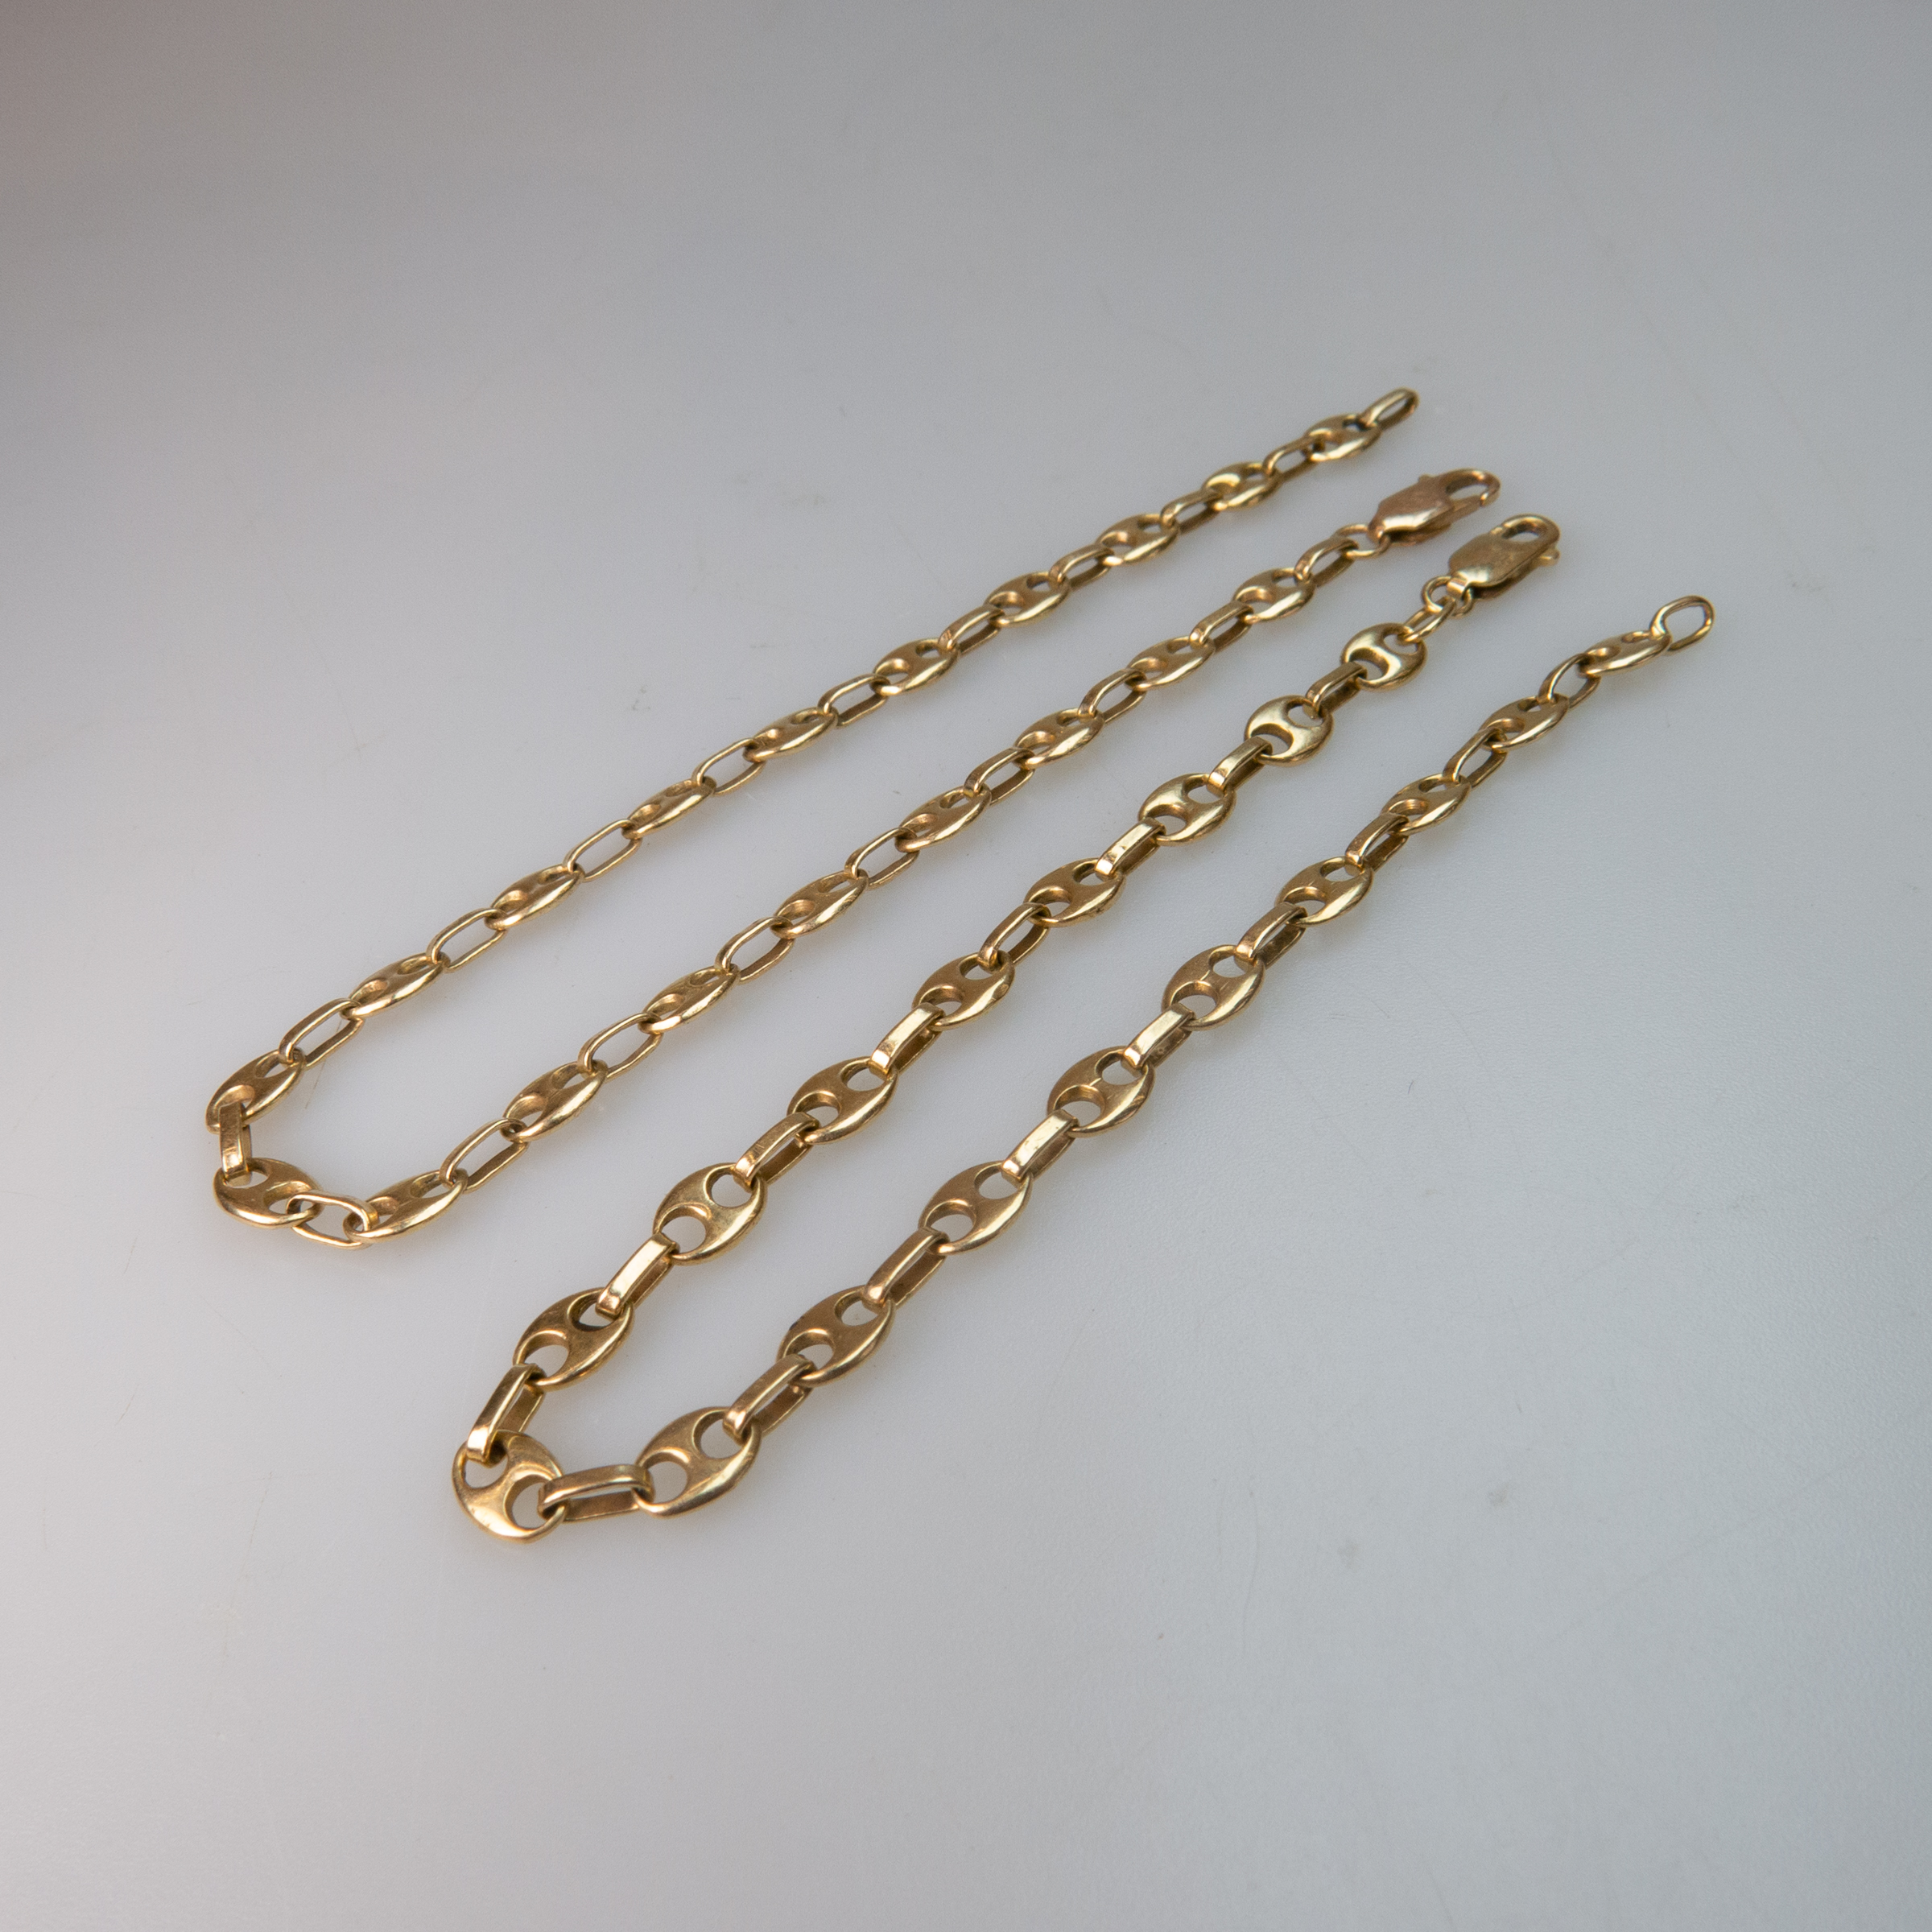 2 x 14k Yellow Gold Gucci Link Bracelets